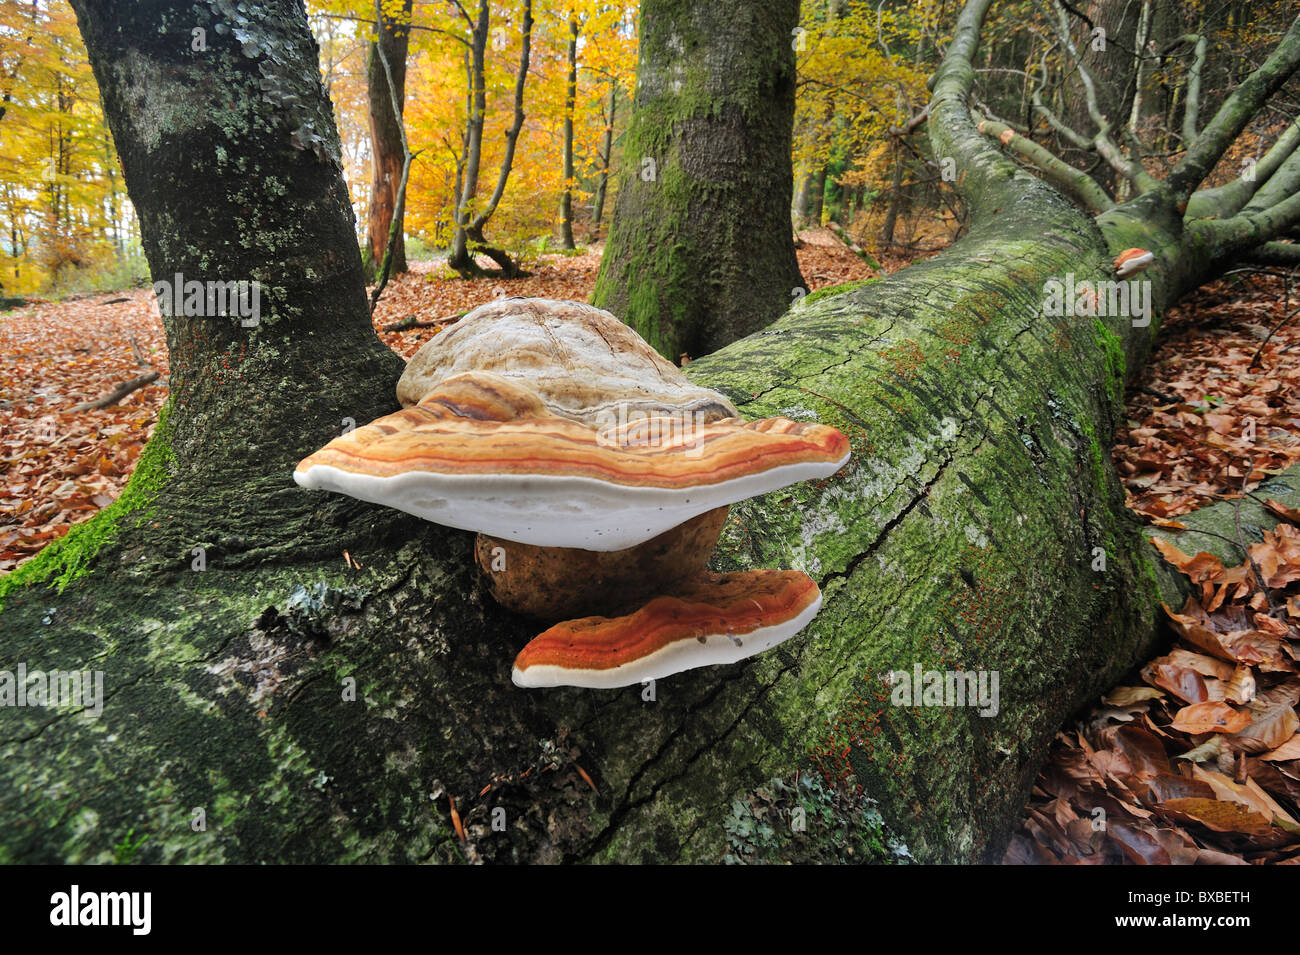 Tinder bracket fungus / Hoof fungus / Tinder polypore / Horse's hoof (Fomes  fomentarius) on fallen tree trunk Stock Photo - Alamy